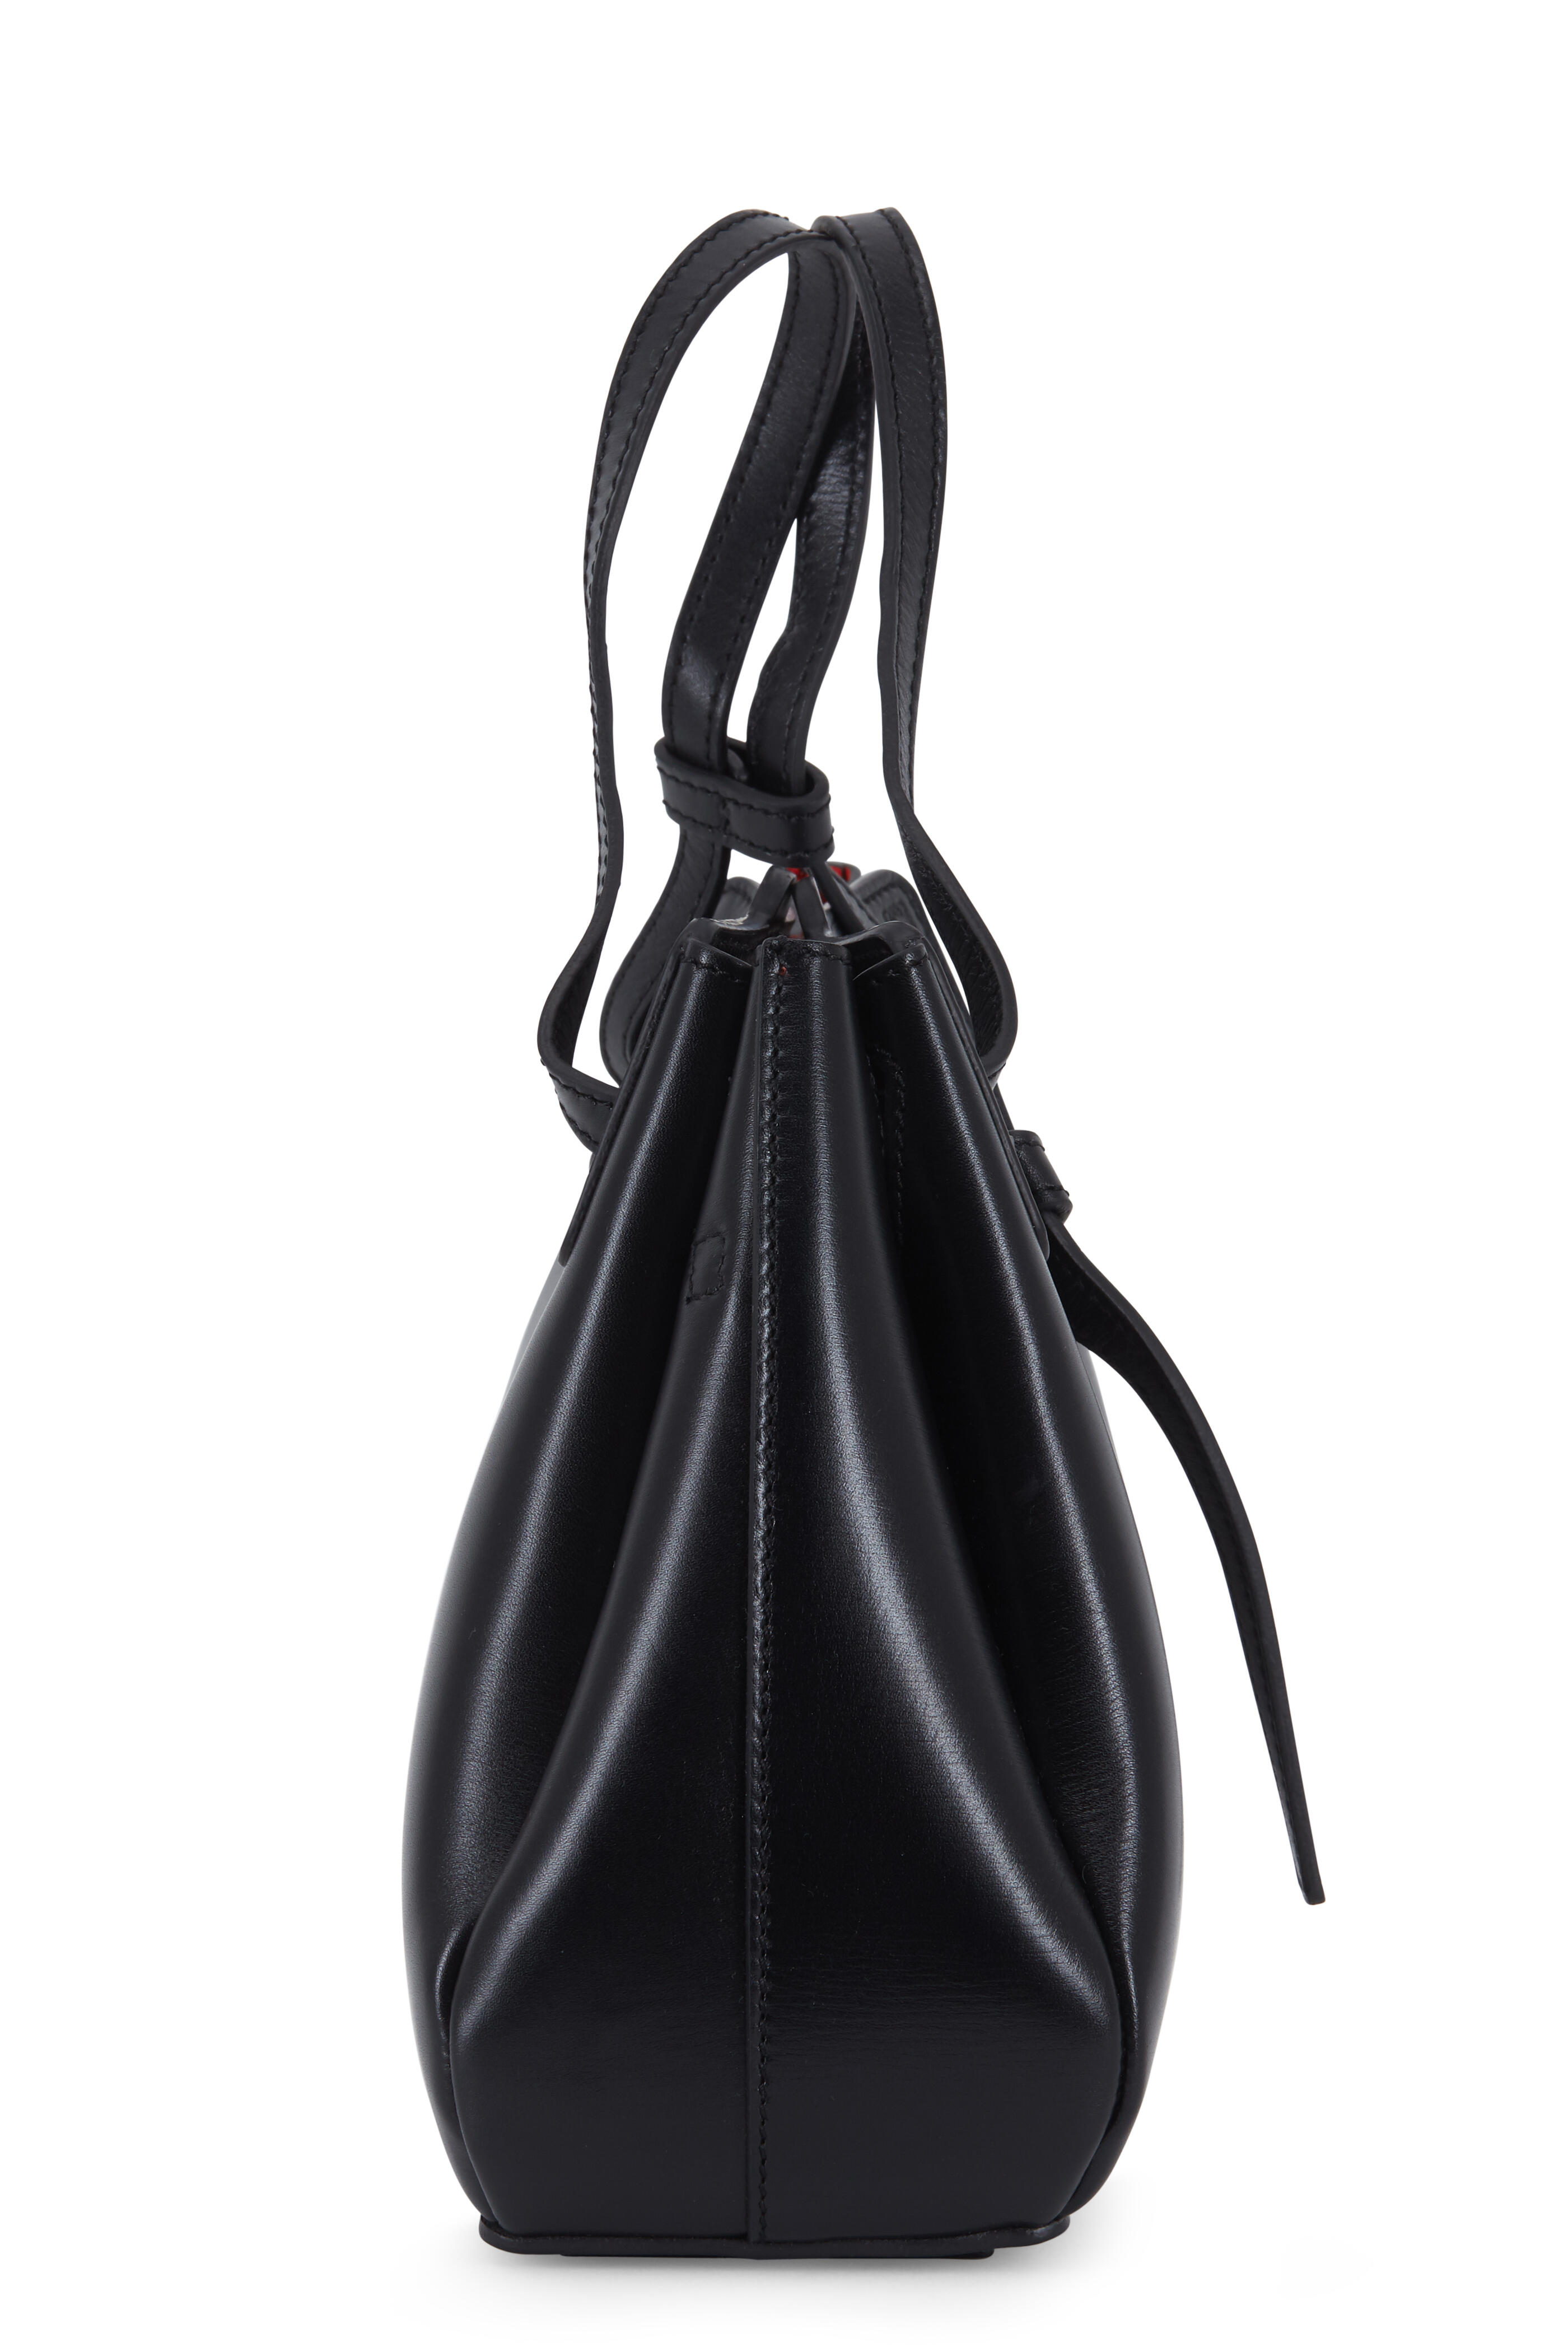 Loewe Lazo Leather Bucket Bag in Black